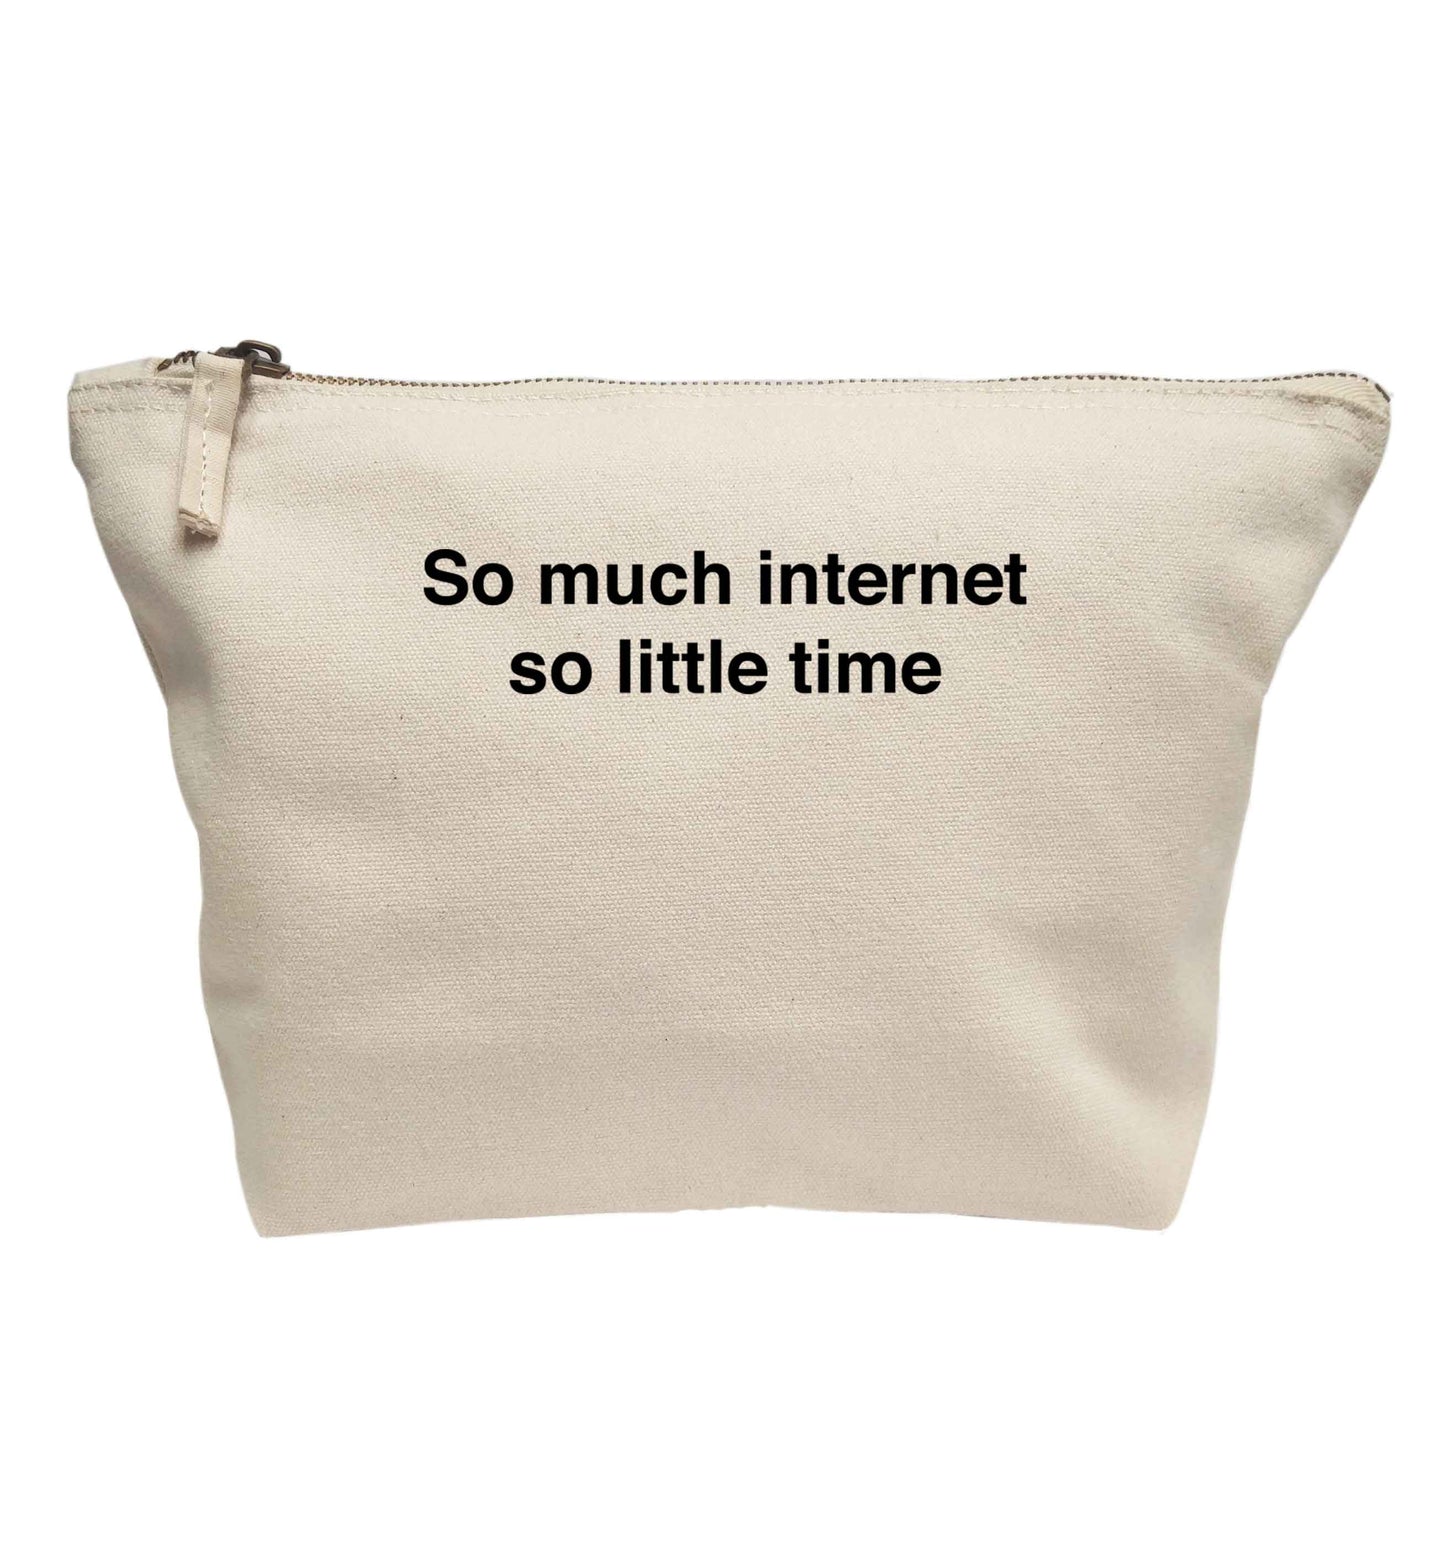 So much internet so little time | Makeup / wash bag